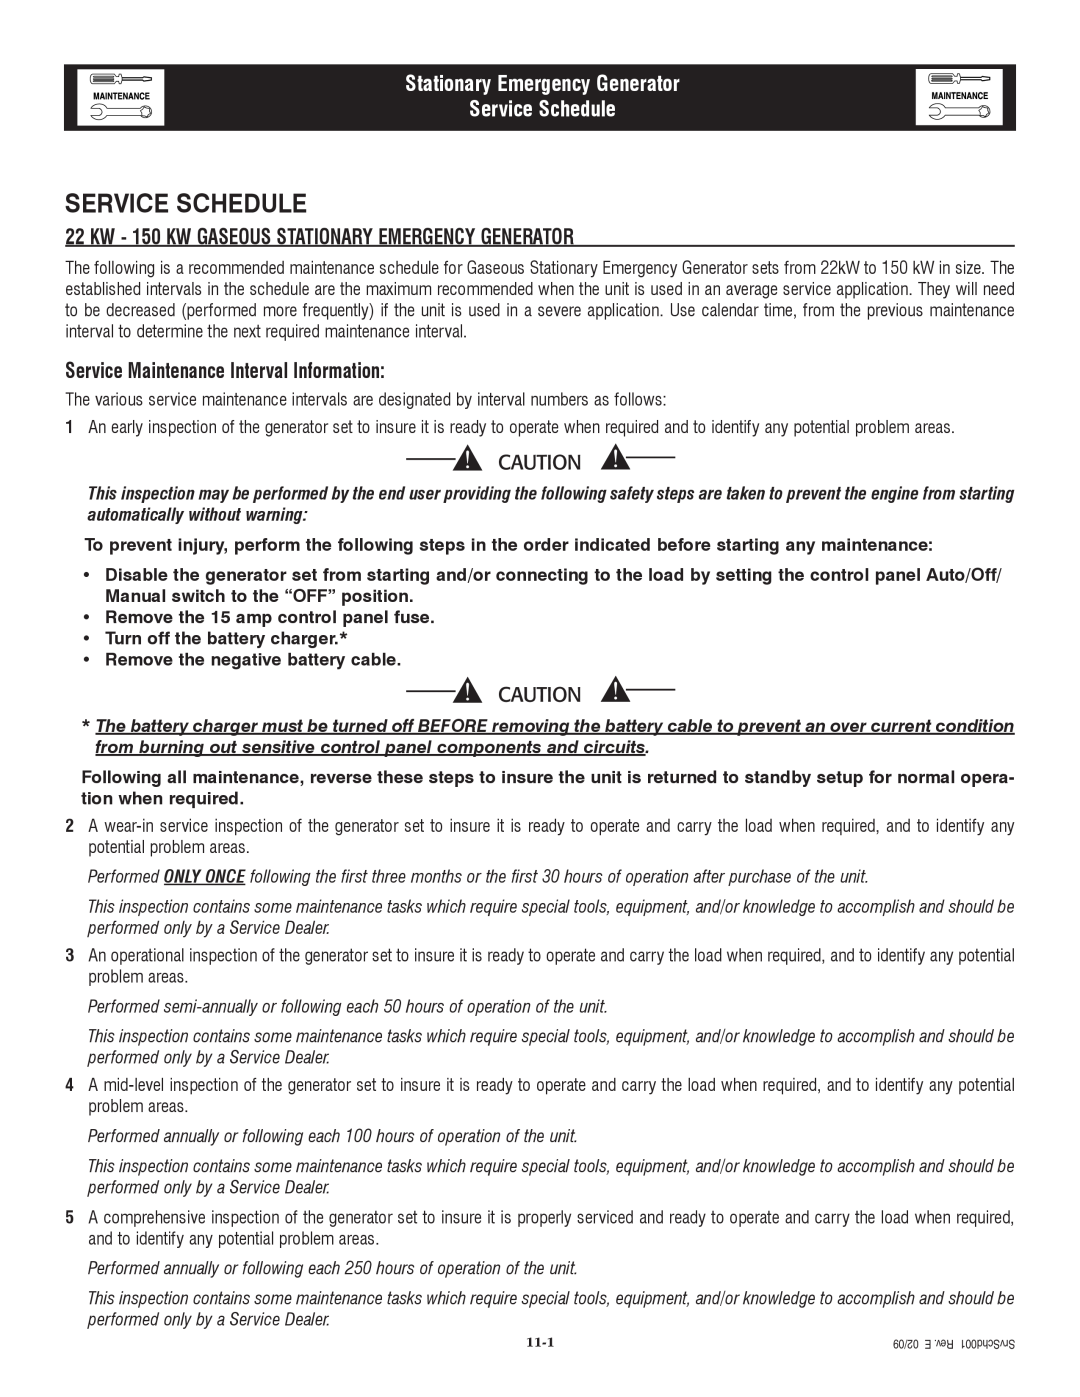 Grandstream Networks 005261-0 Stationary Emergency Generator Service Schedule, Service Maintenance Interval Information 